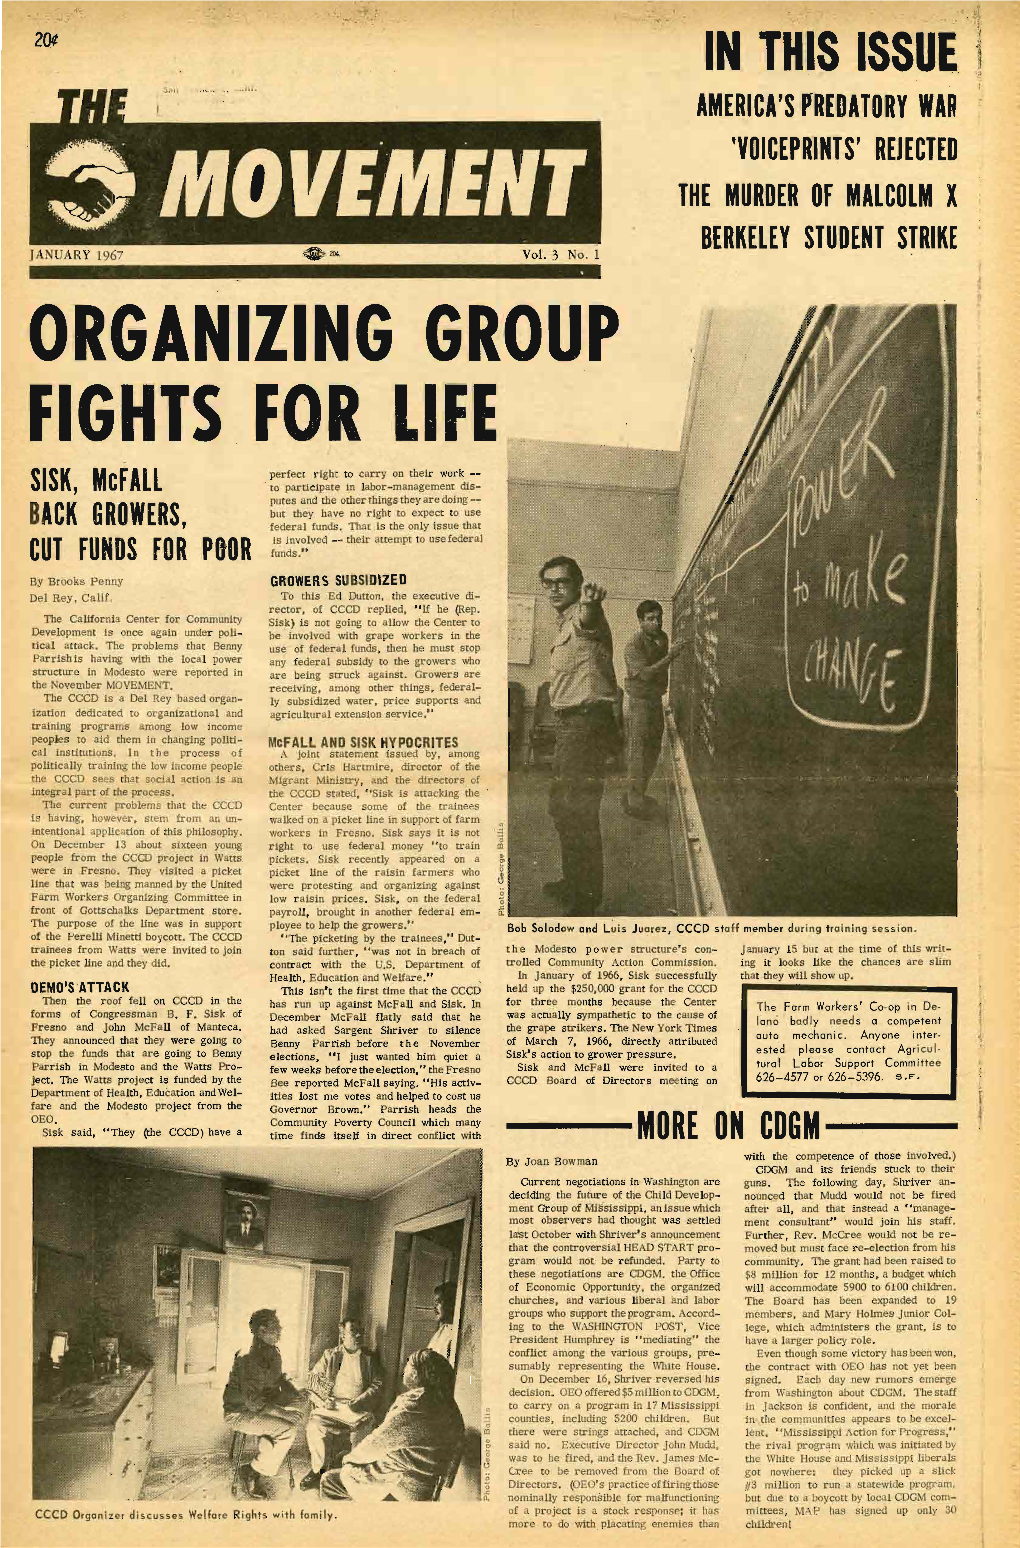 The Movement, January 1967. Vol. 3 No. 1